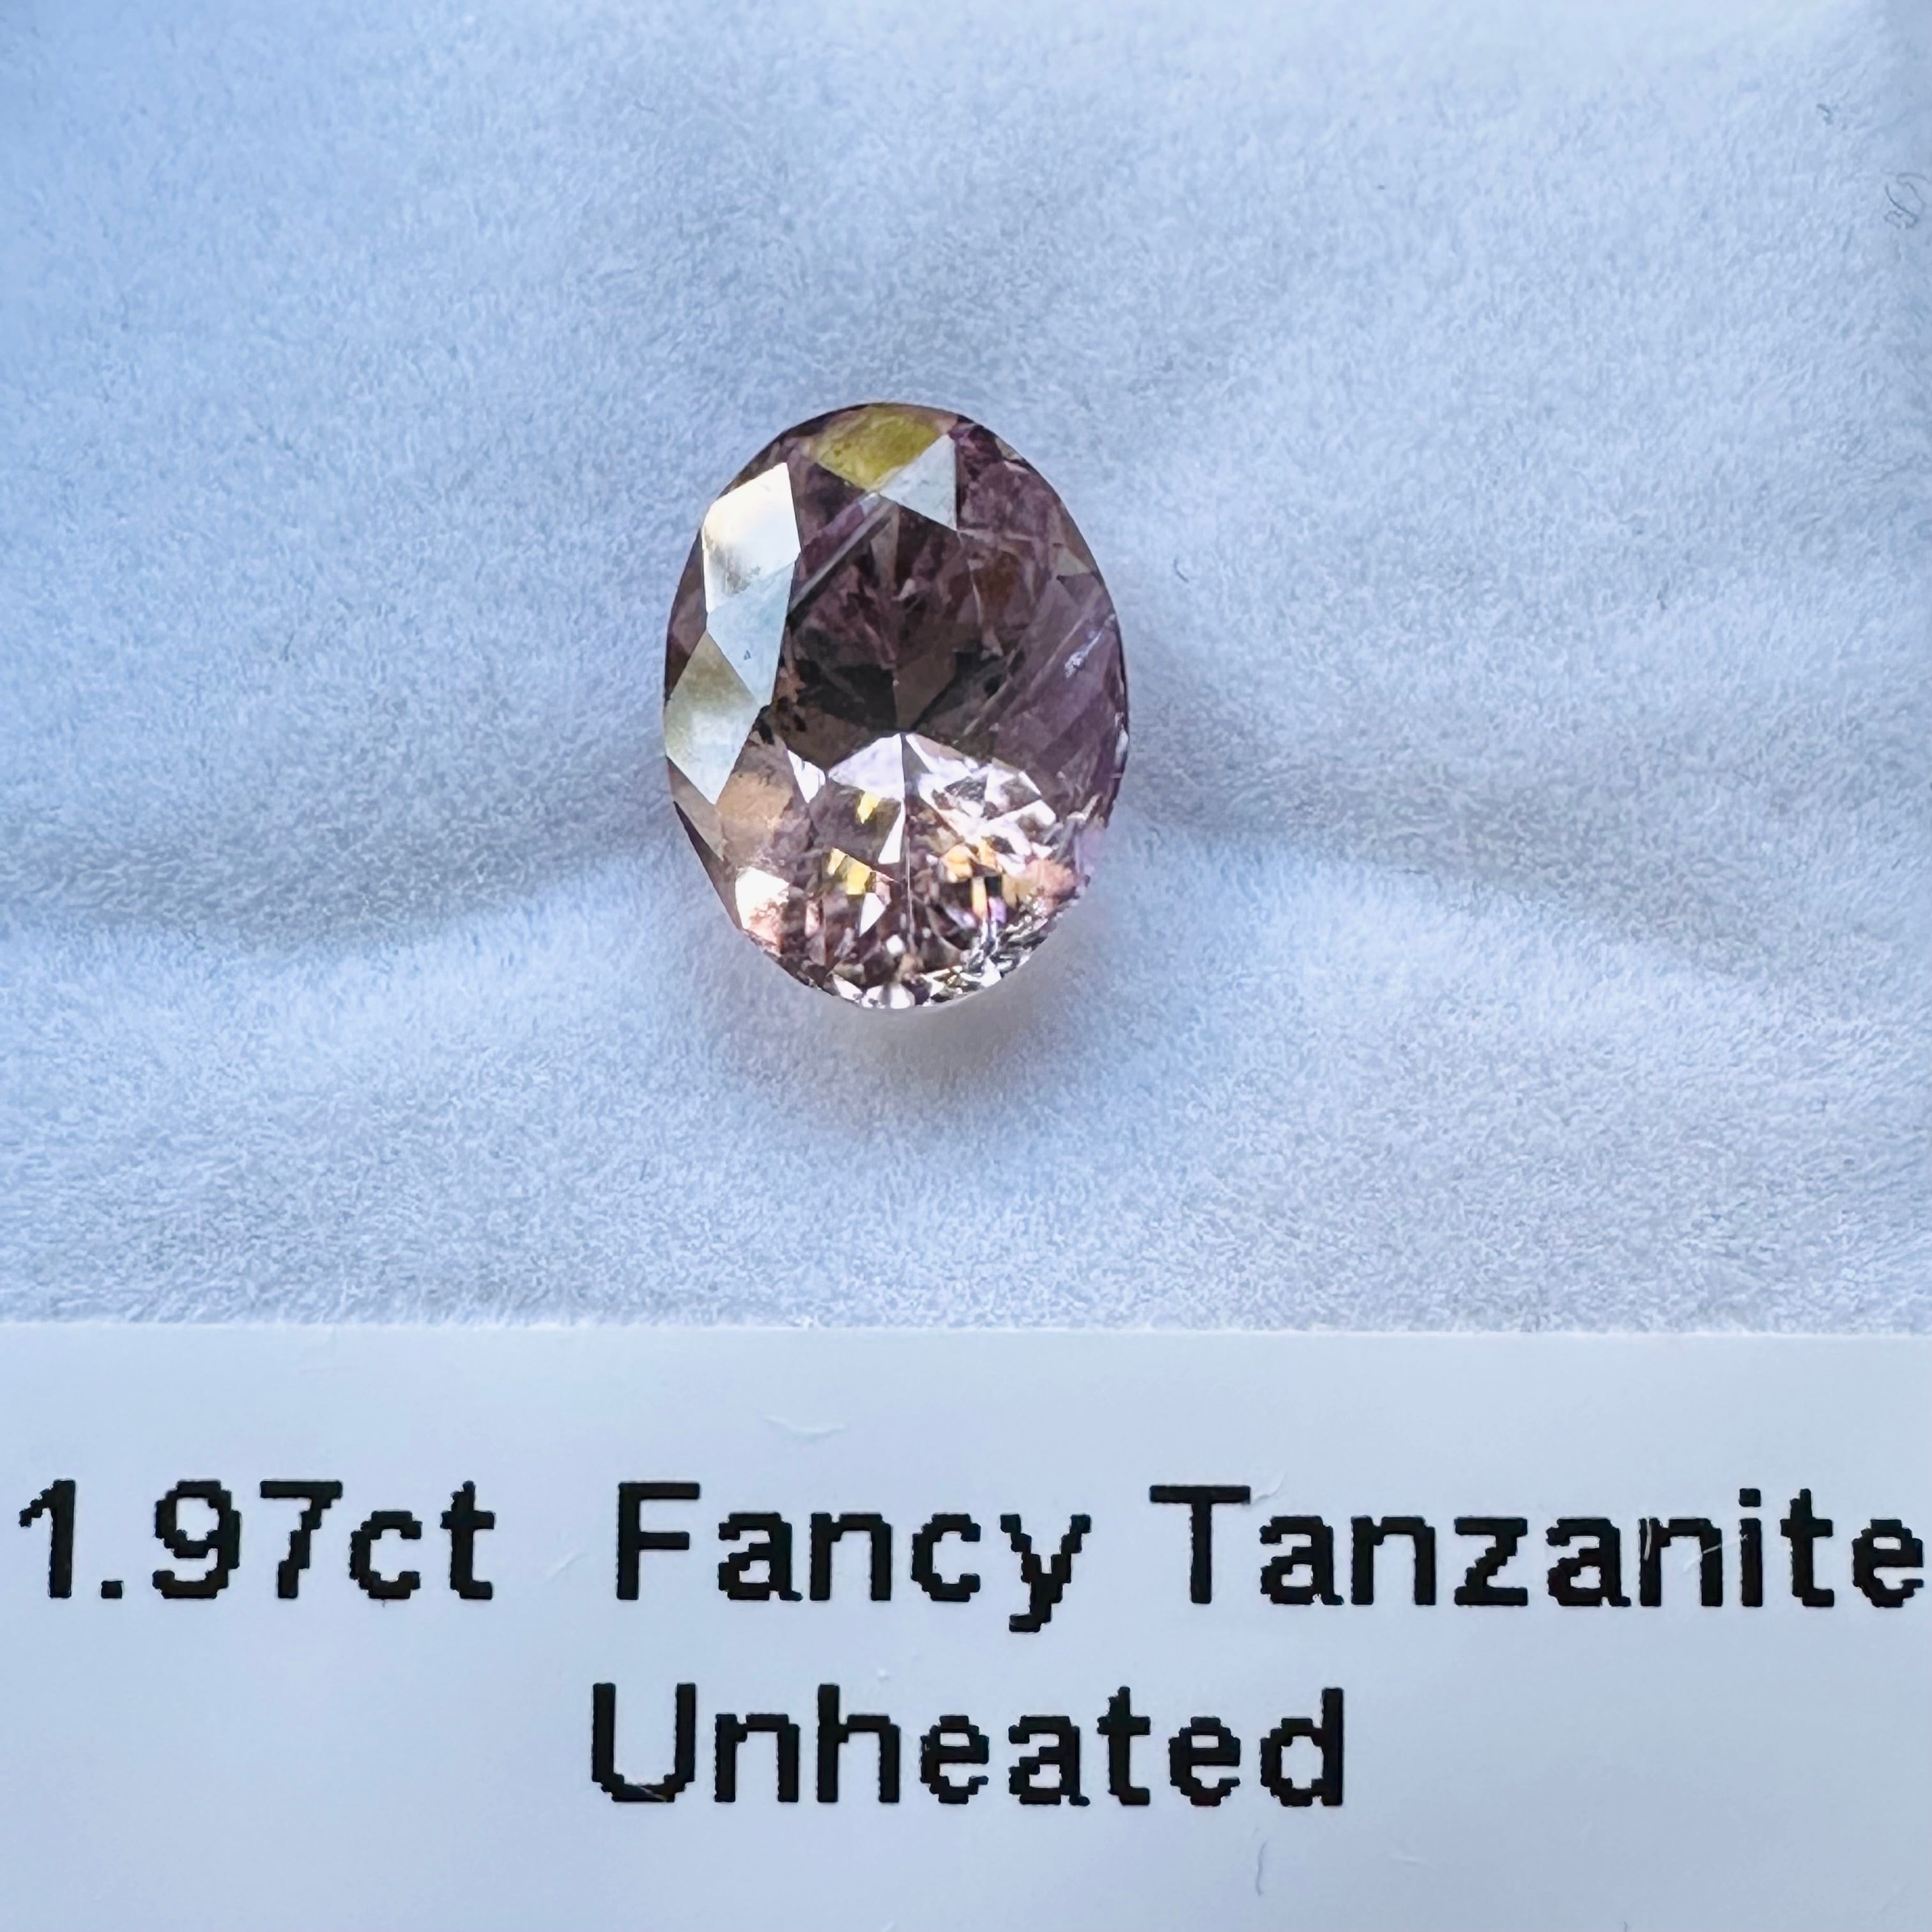 1.97ct Fancy Tanzanite, Tanzania, Untreated Unheated, stone has inclusions inside